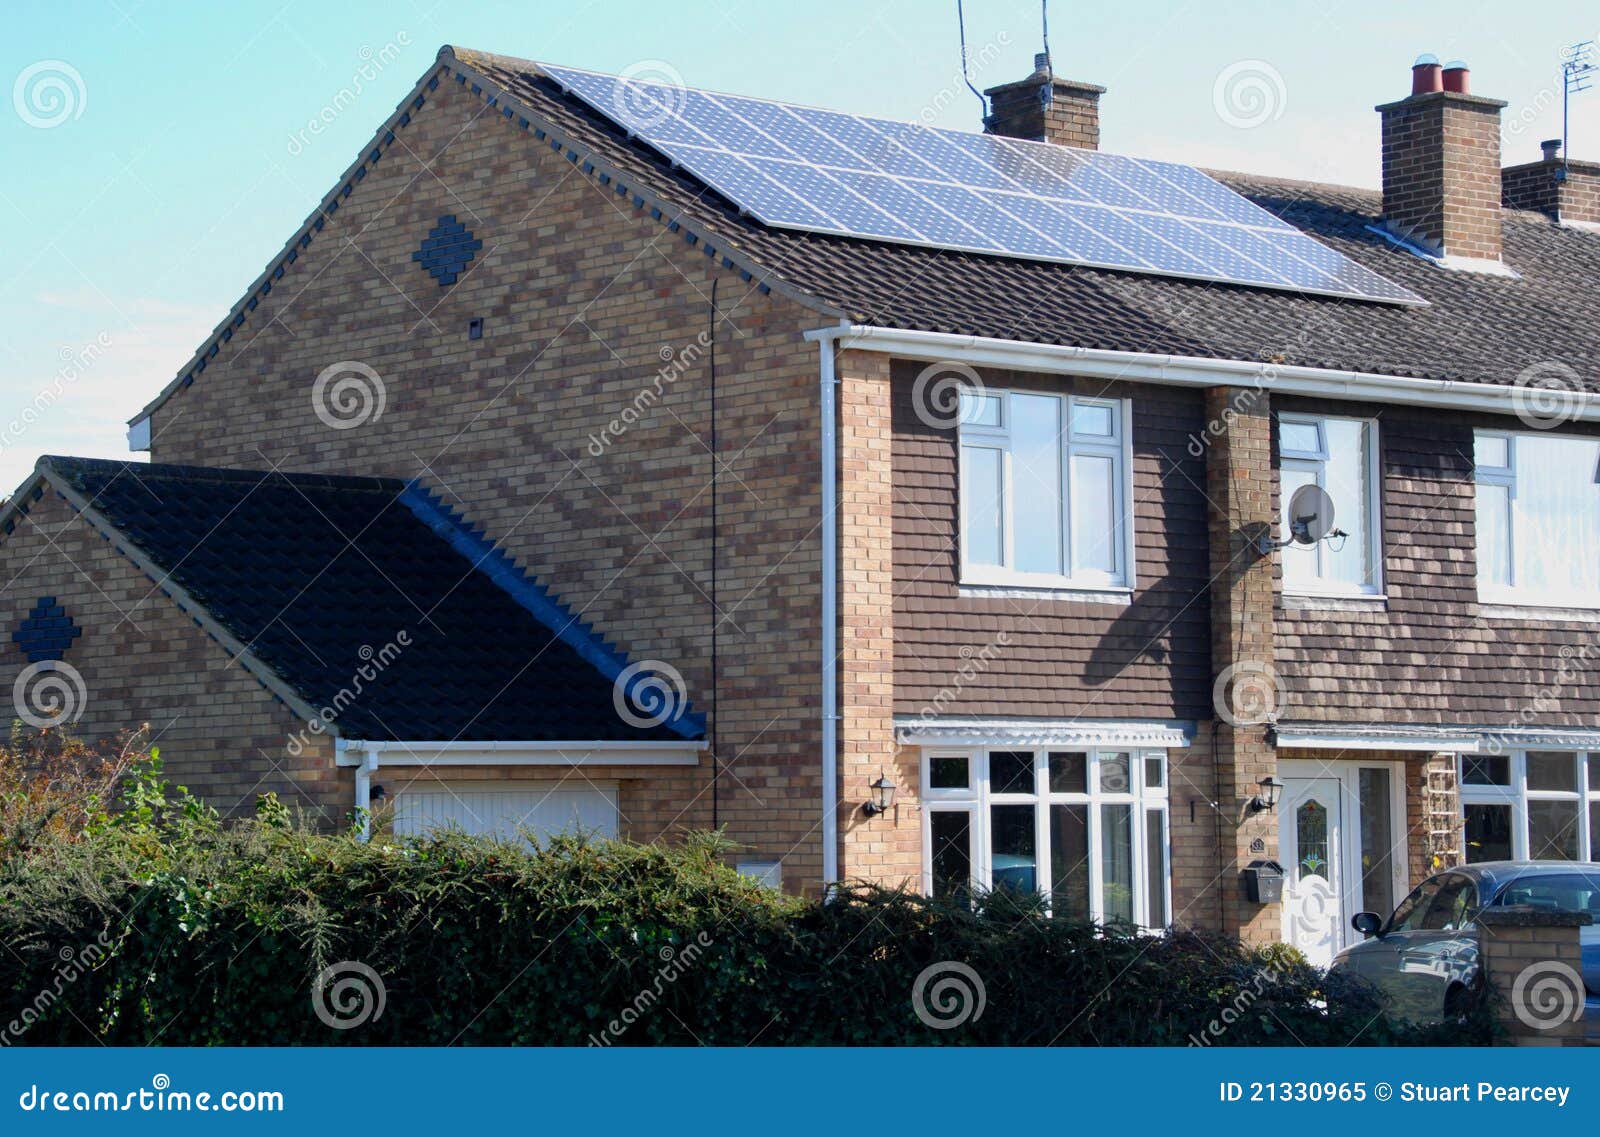 domestic solar panels